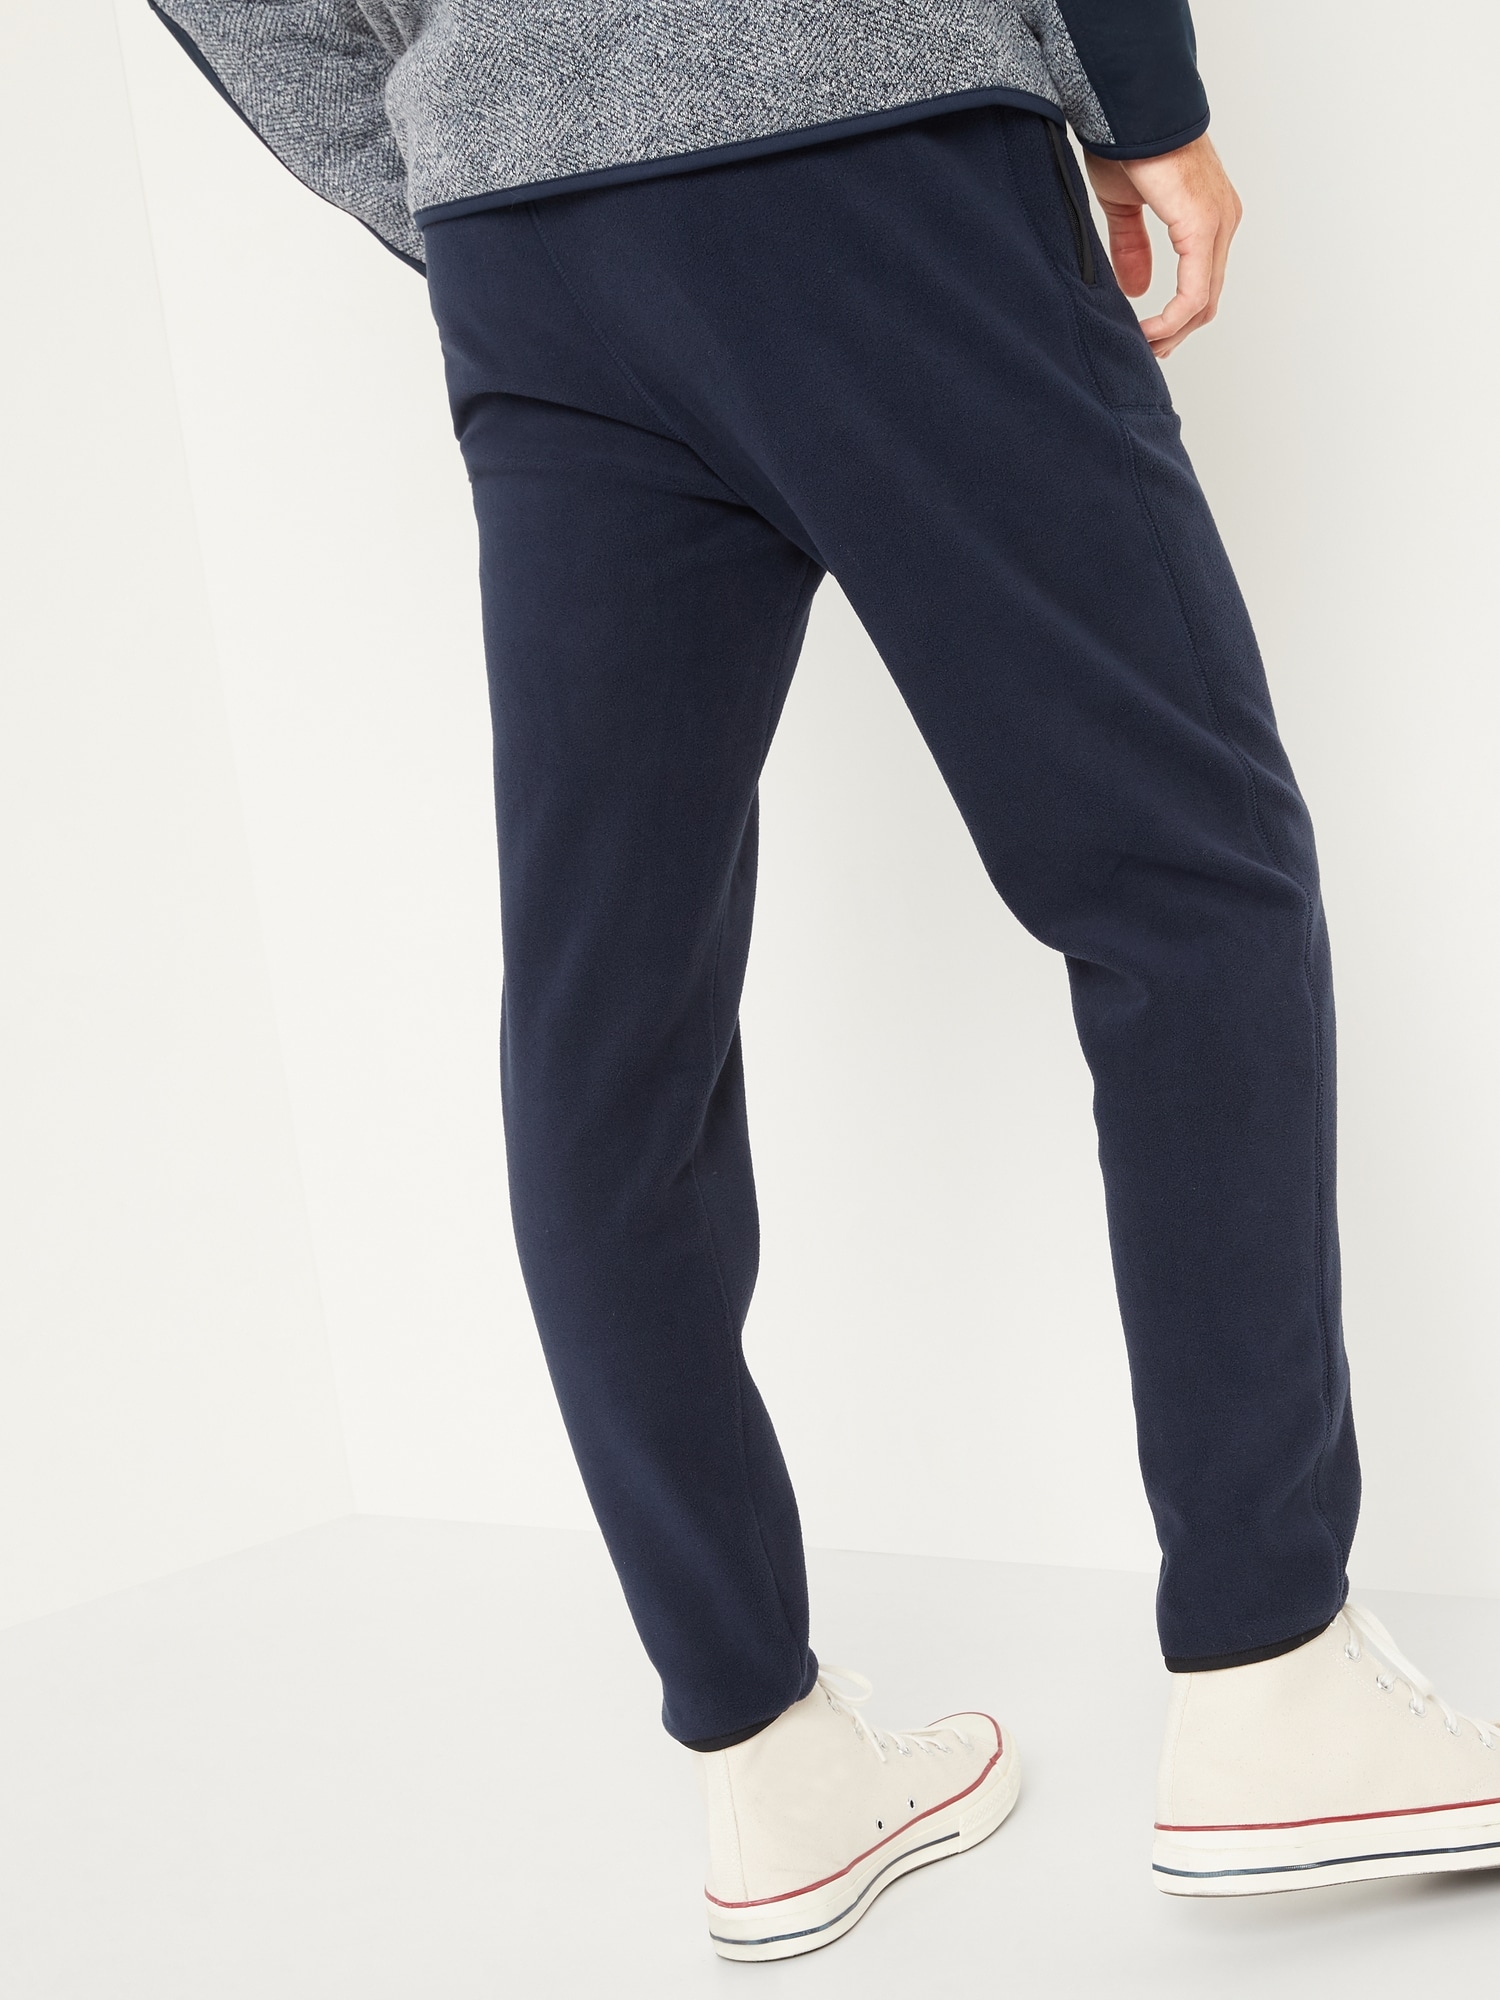 Go-Warm Micro Performance Fleece Tapered Sweatpants for Men